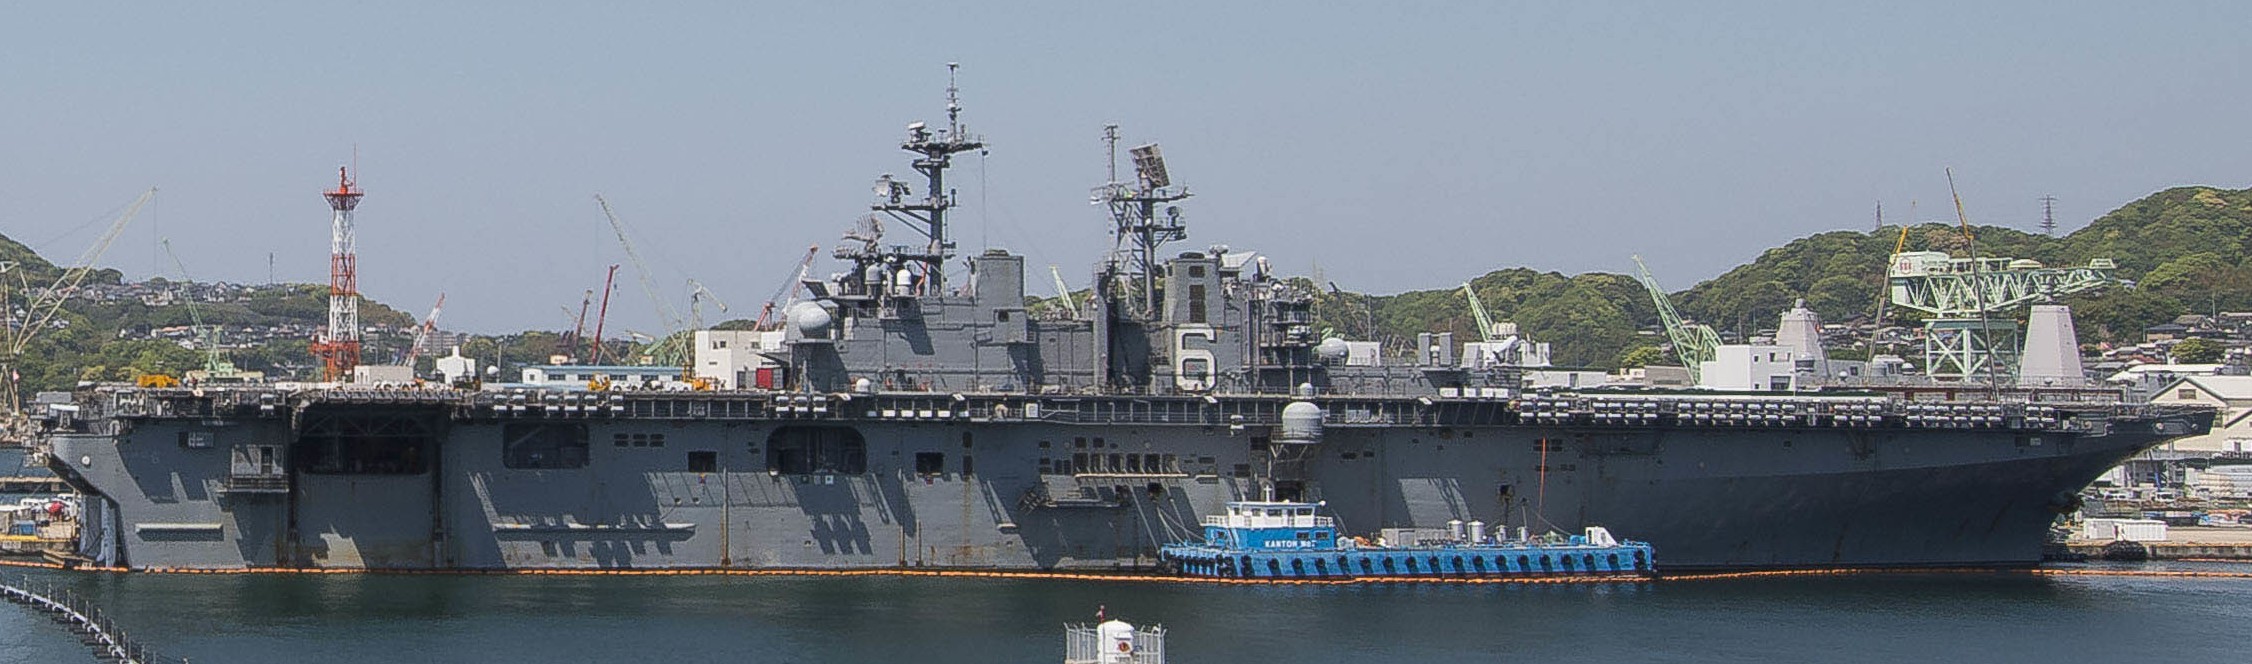 lhd-6 uss bonhomme richard amphibious assault ship landing helicopter dock wasp class us navy sasebo japan 281